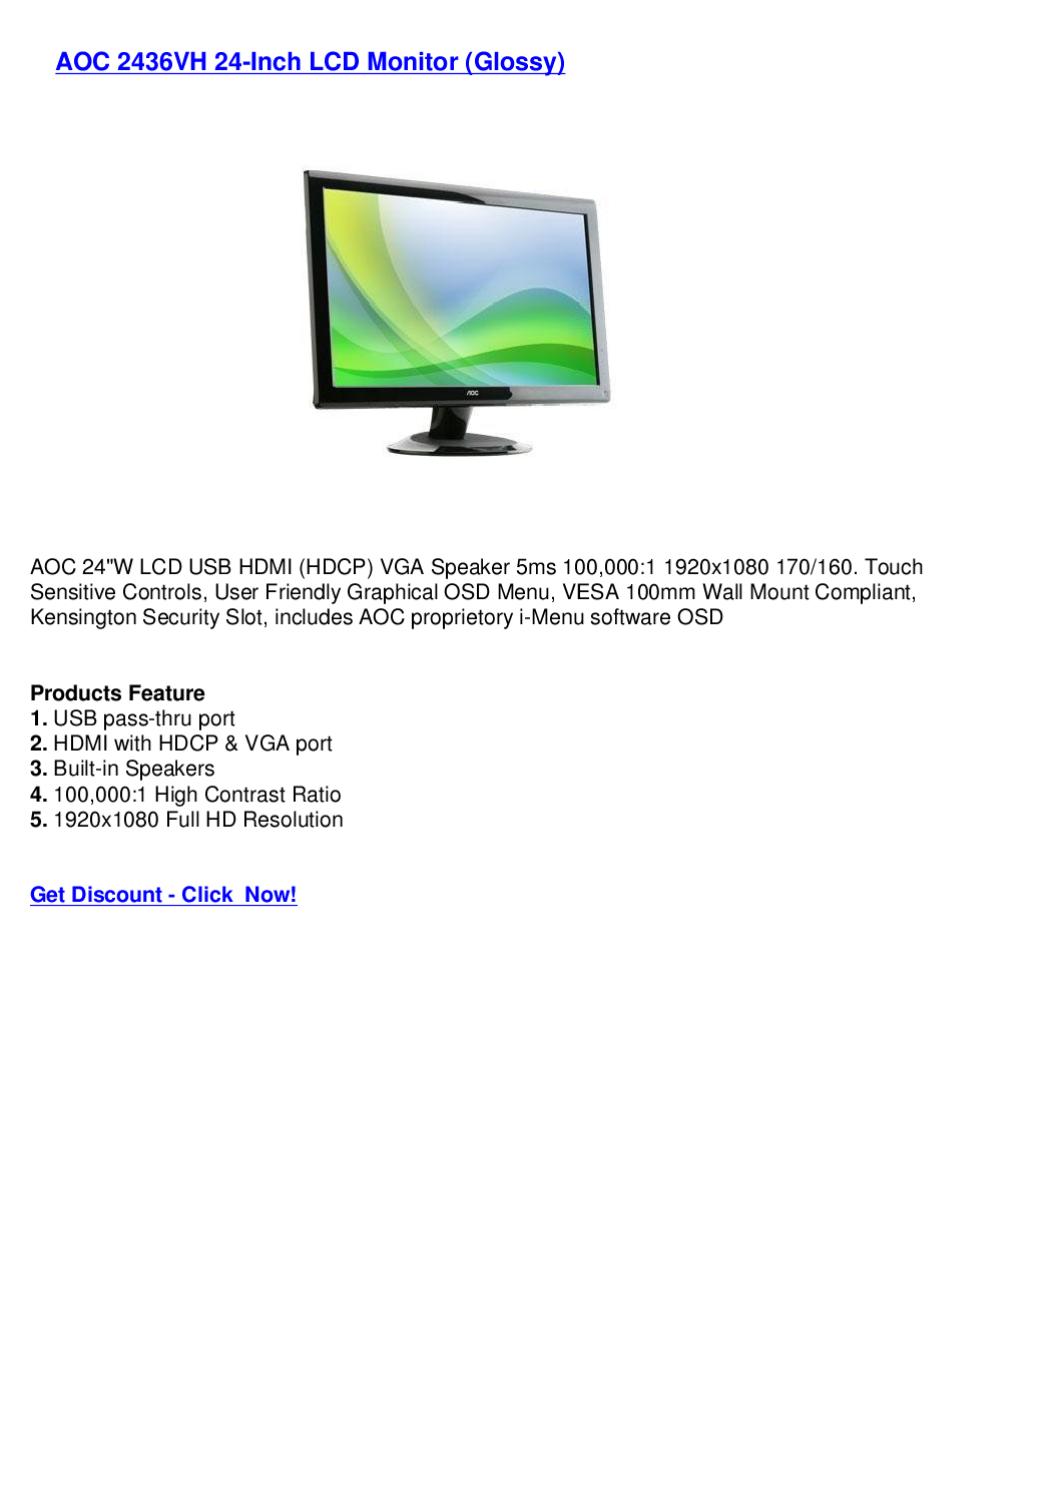 aoc screen software windows 10